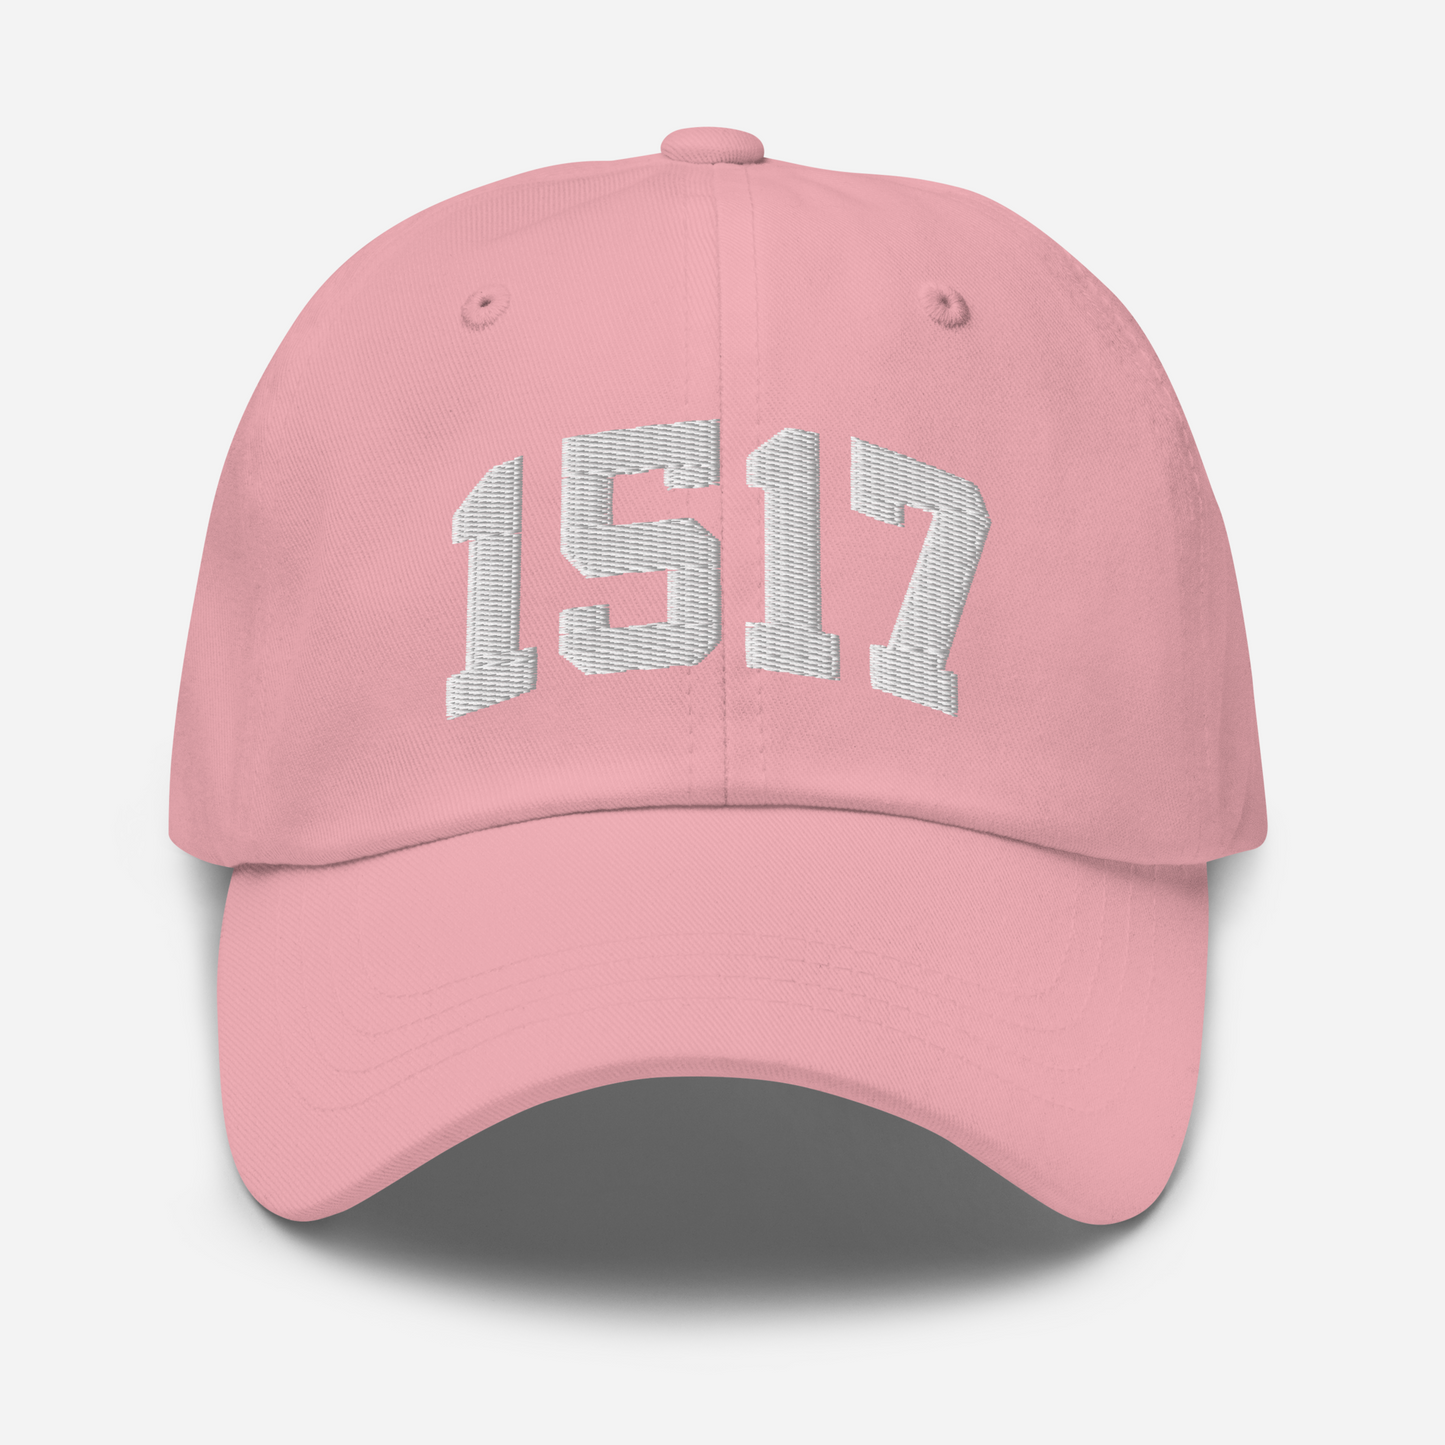 1517 Baseball Hat